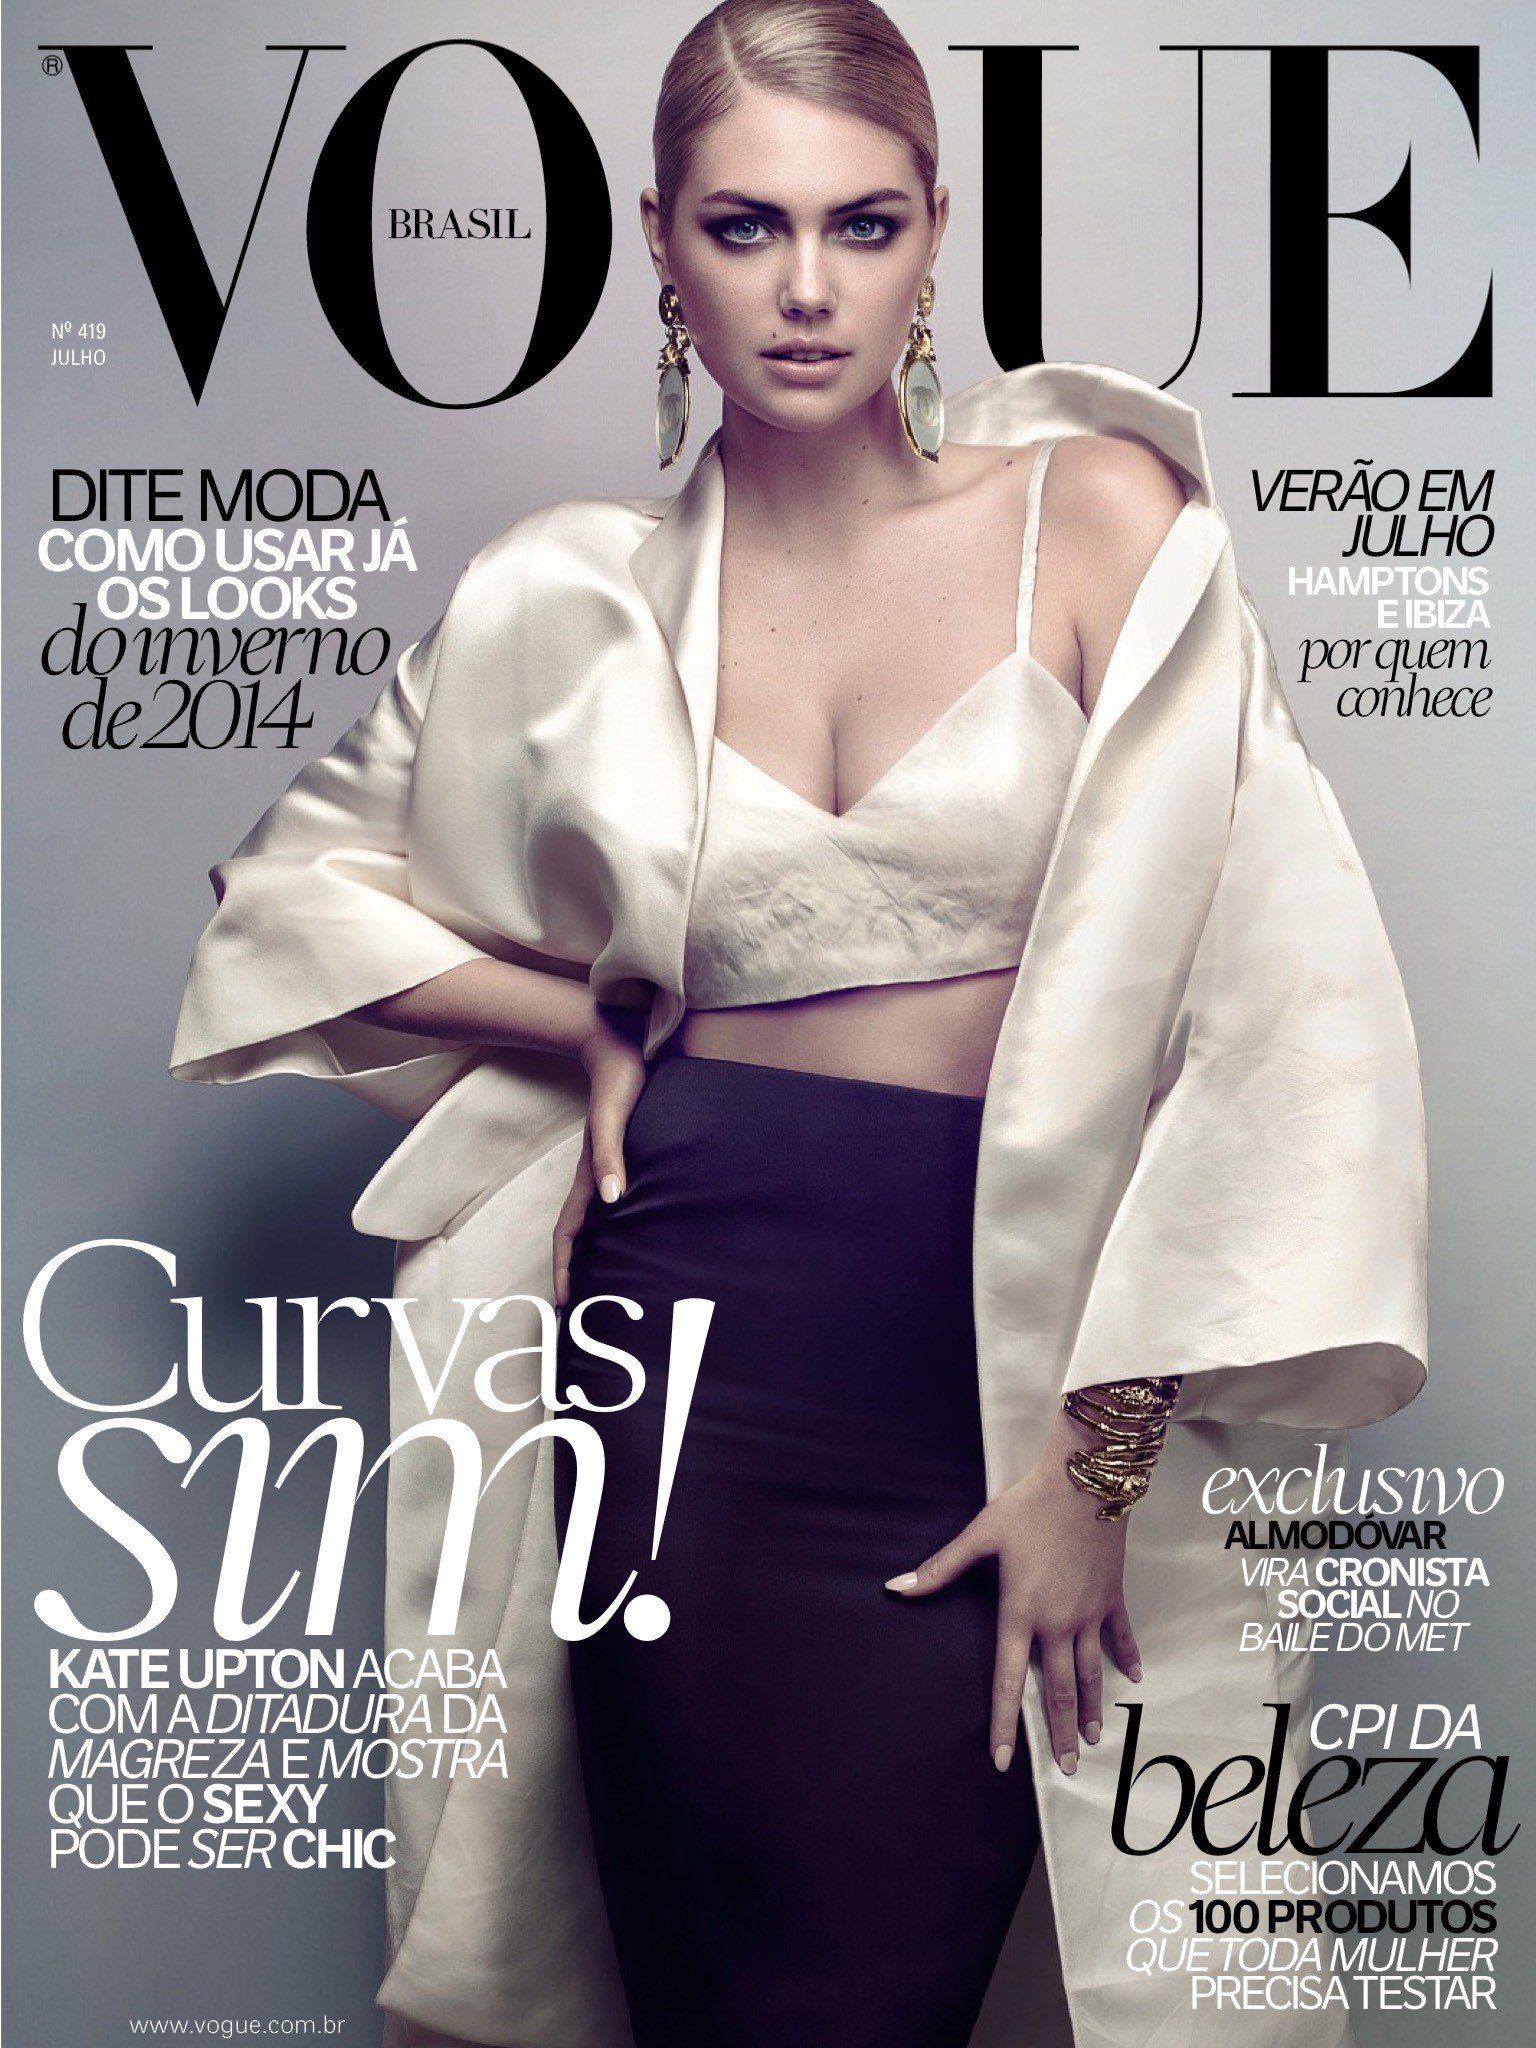 Kate Upton "Vogue MAGAZINE"